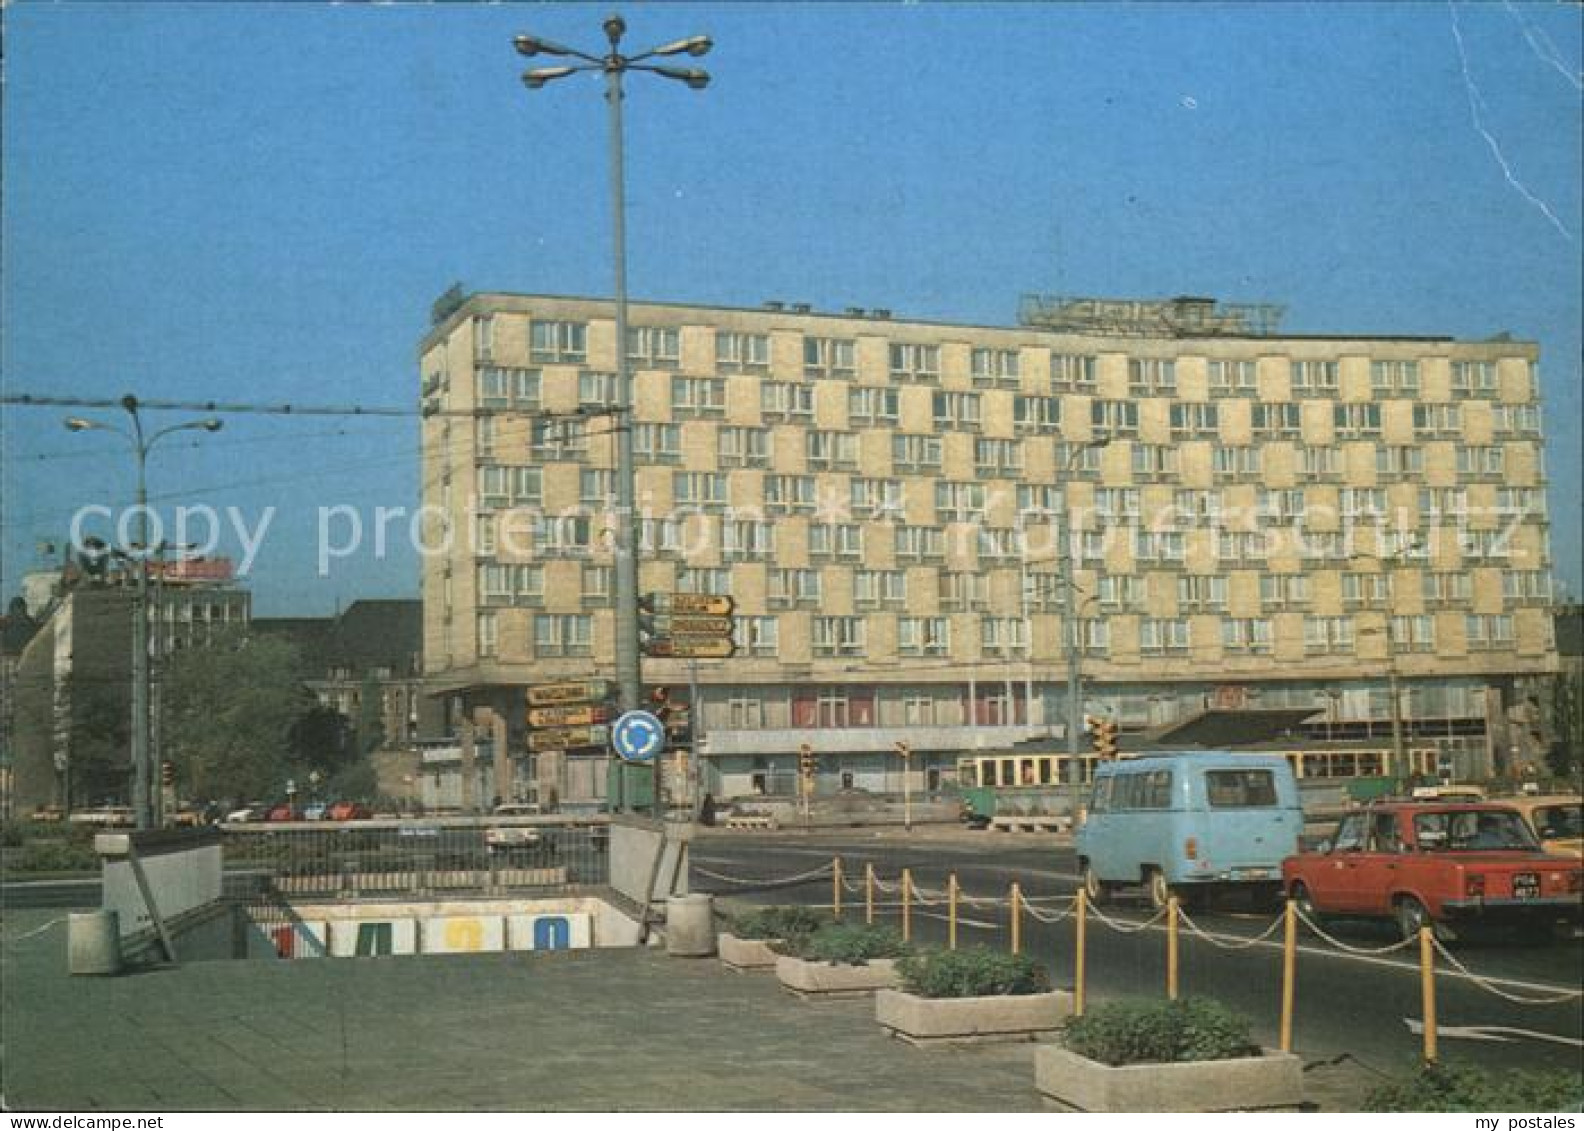 72614646 Poznan Posen Hotel Mercury  - Pologne